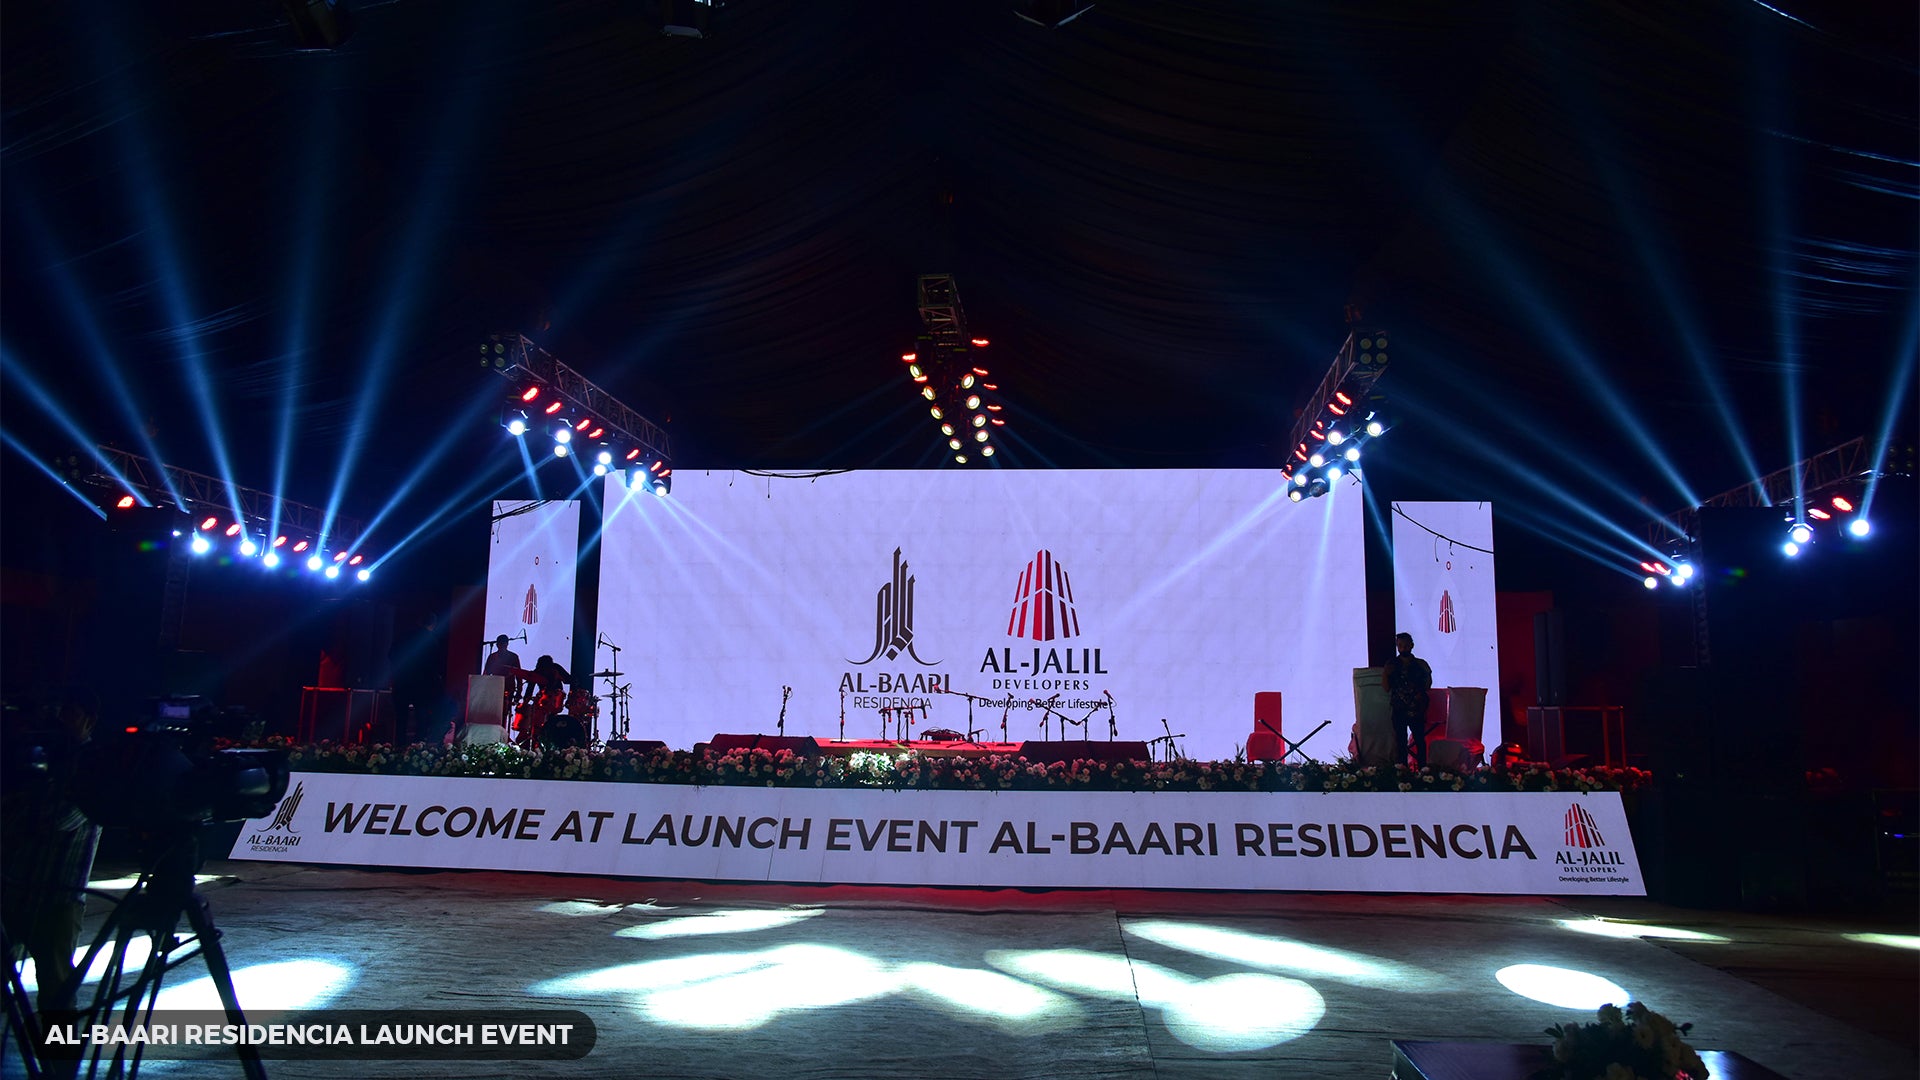 Al-Baari Residencia Launch Event